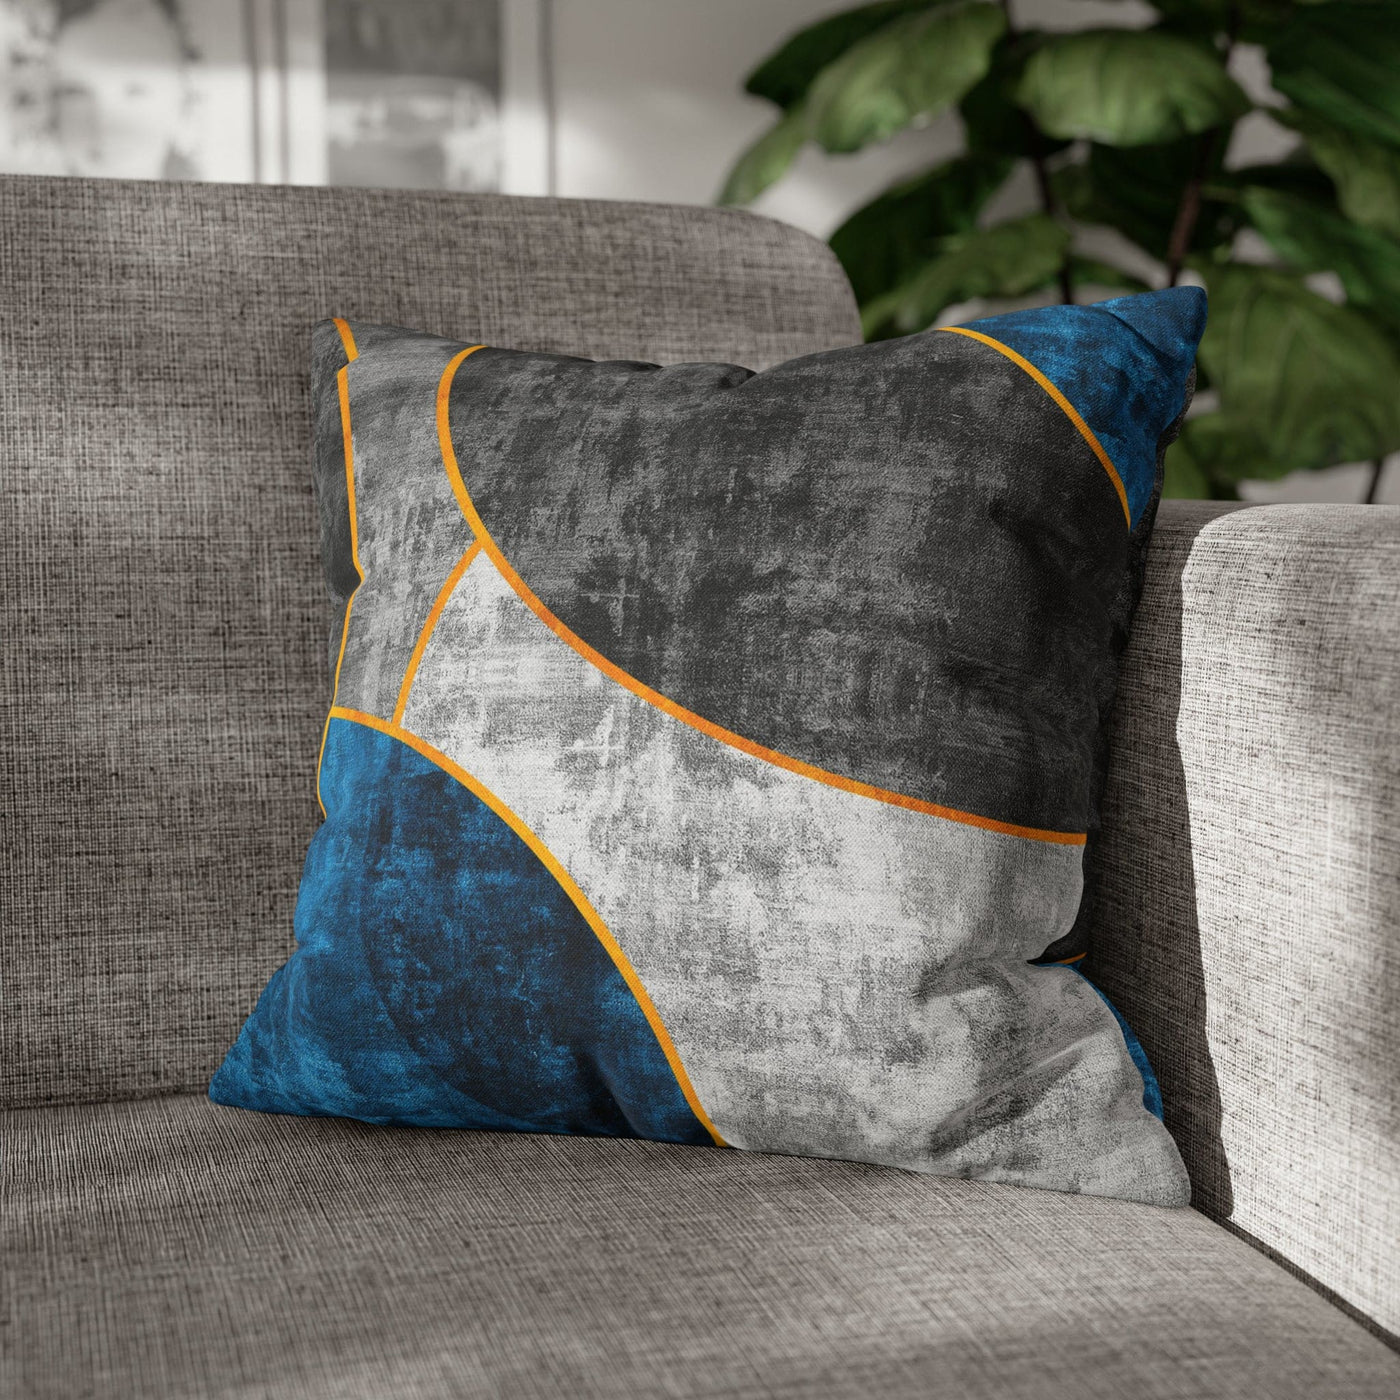 Decorative Throw Pillow Covers With Zipper - Set Of 2 Black Blue Grey Circular